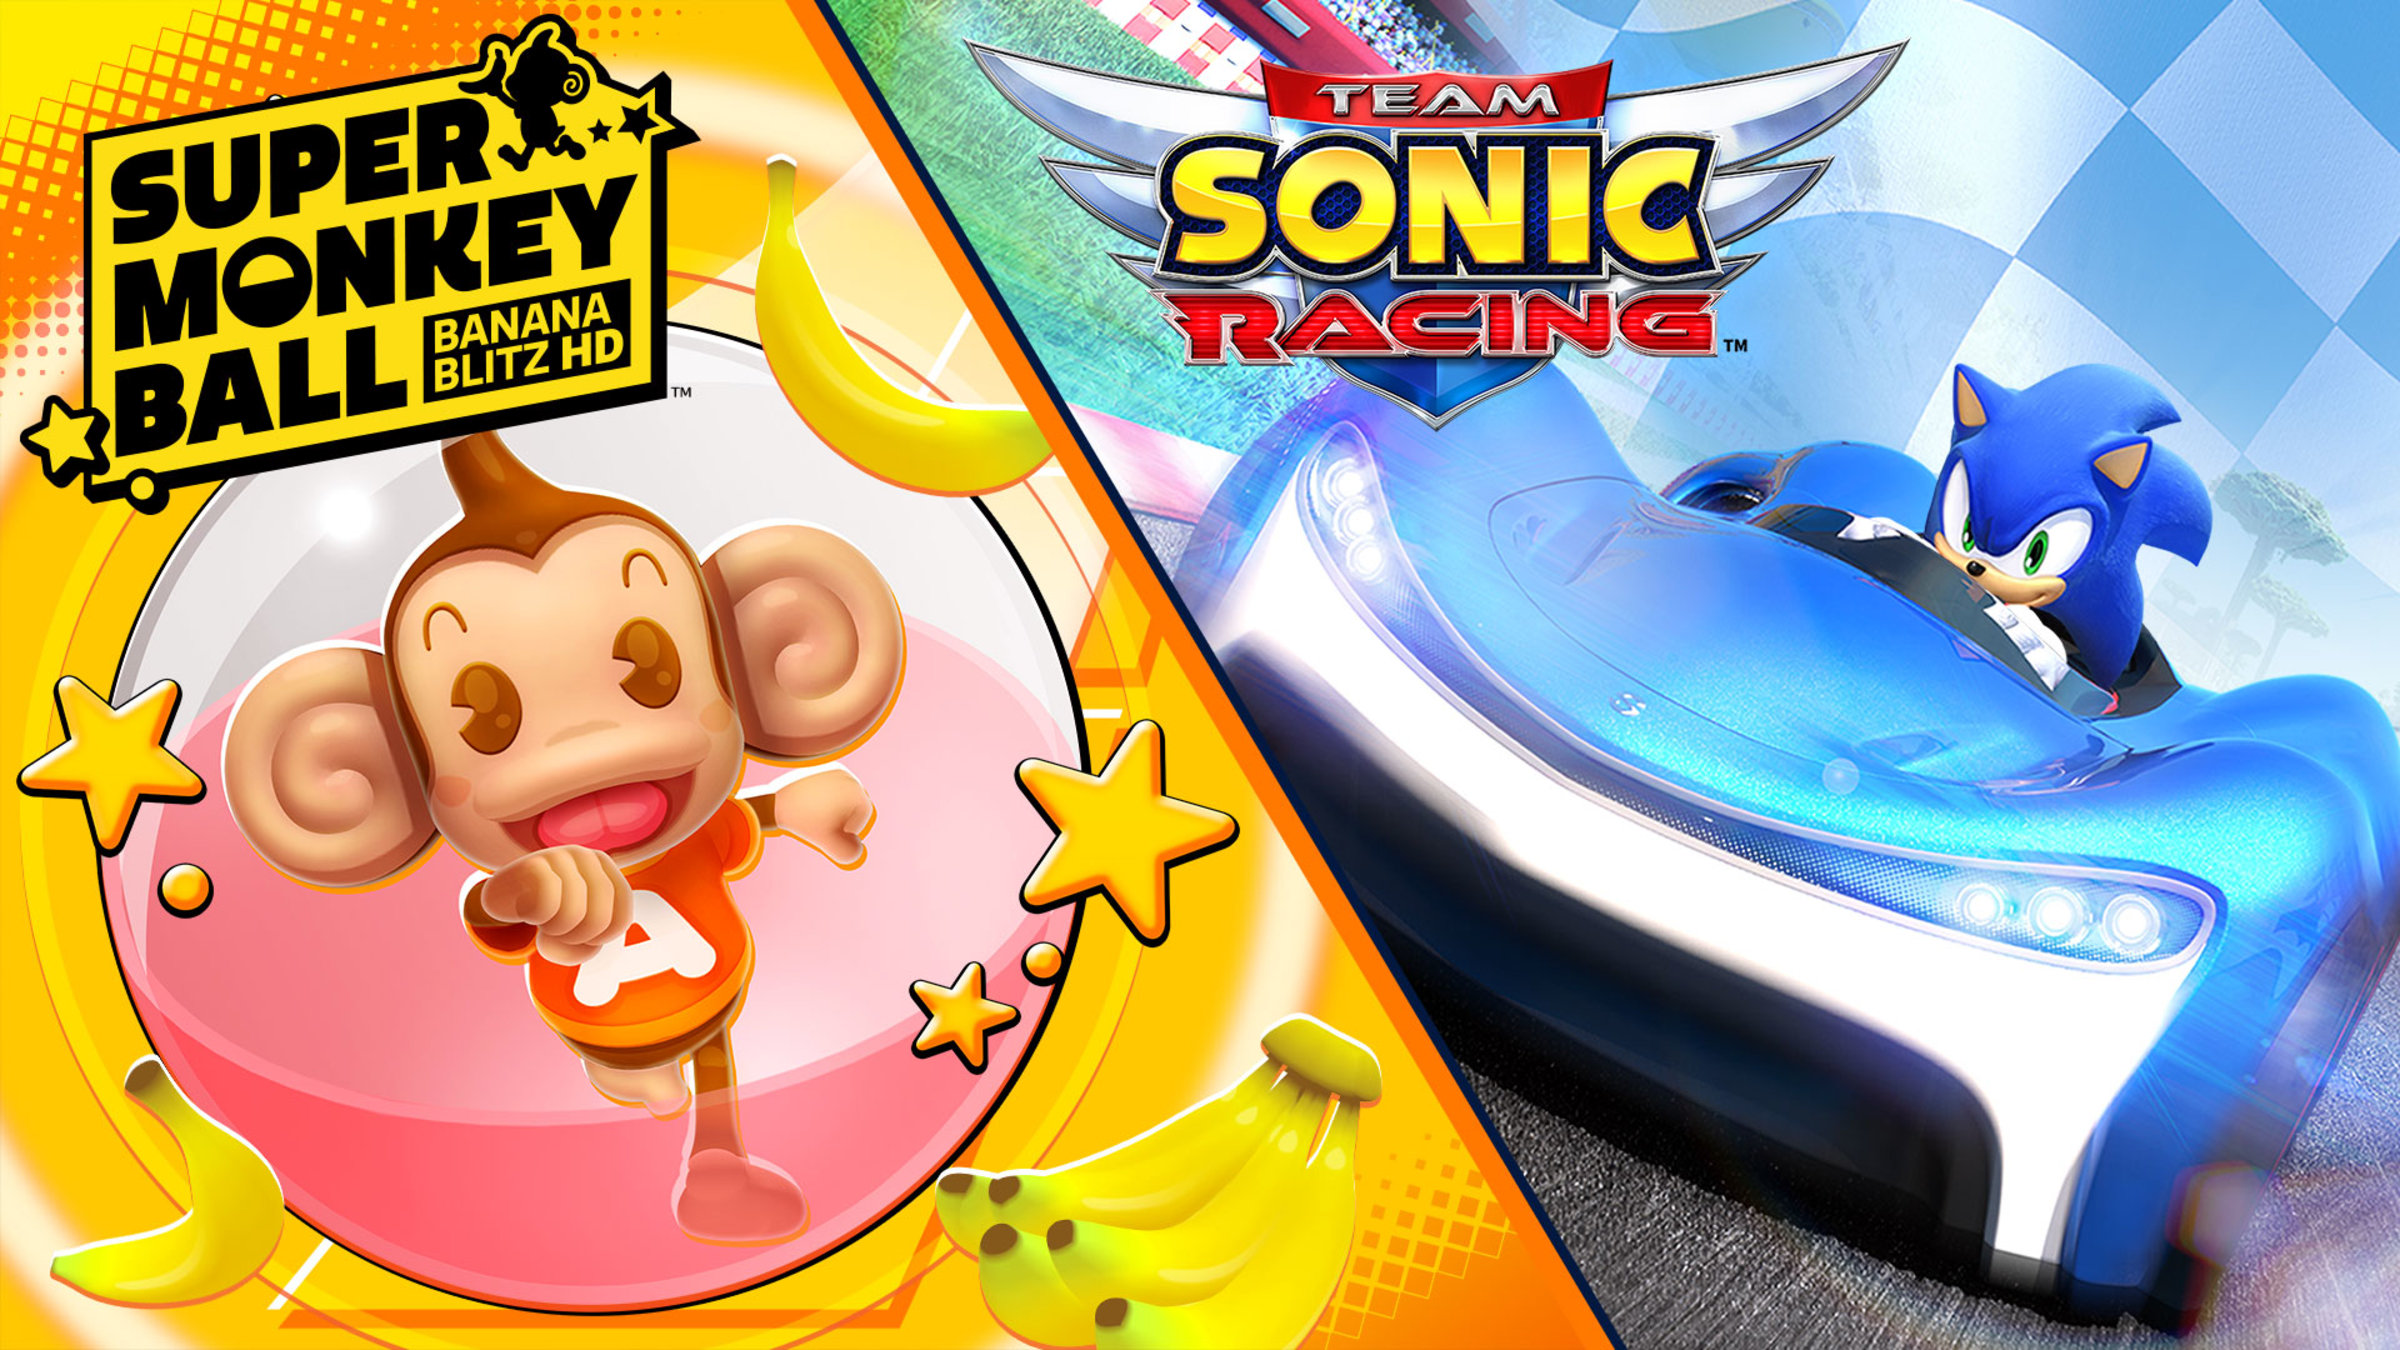 uitspraak potlood Kleverig Team Sonic Racing + Super Monkey Ball: Banana Blitz HD Bundle for Nintendo  Switch - Nintendo Official Site